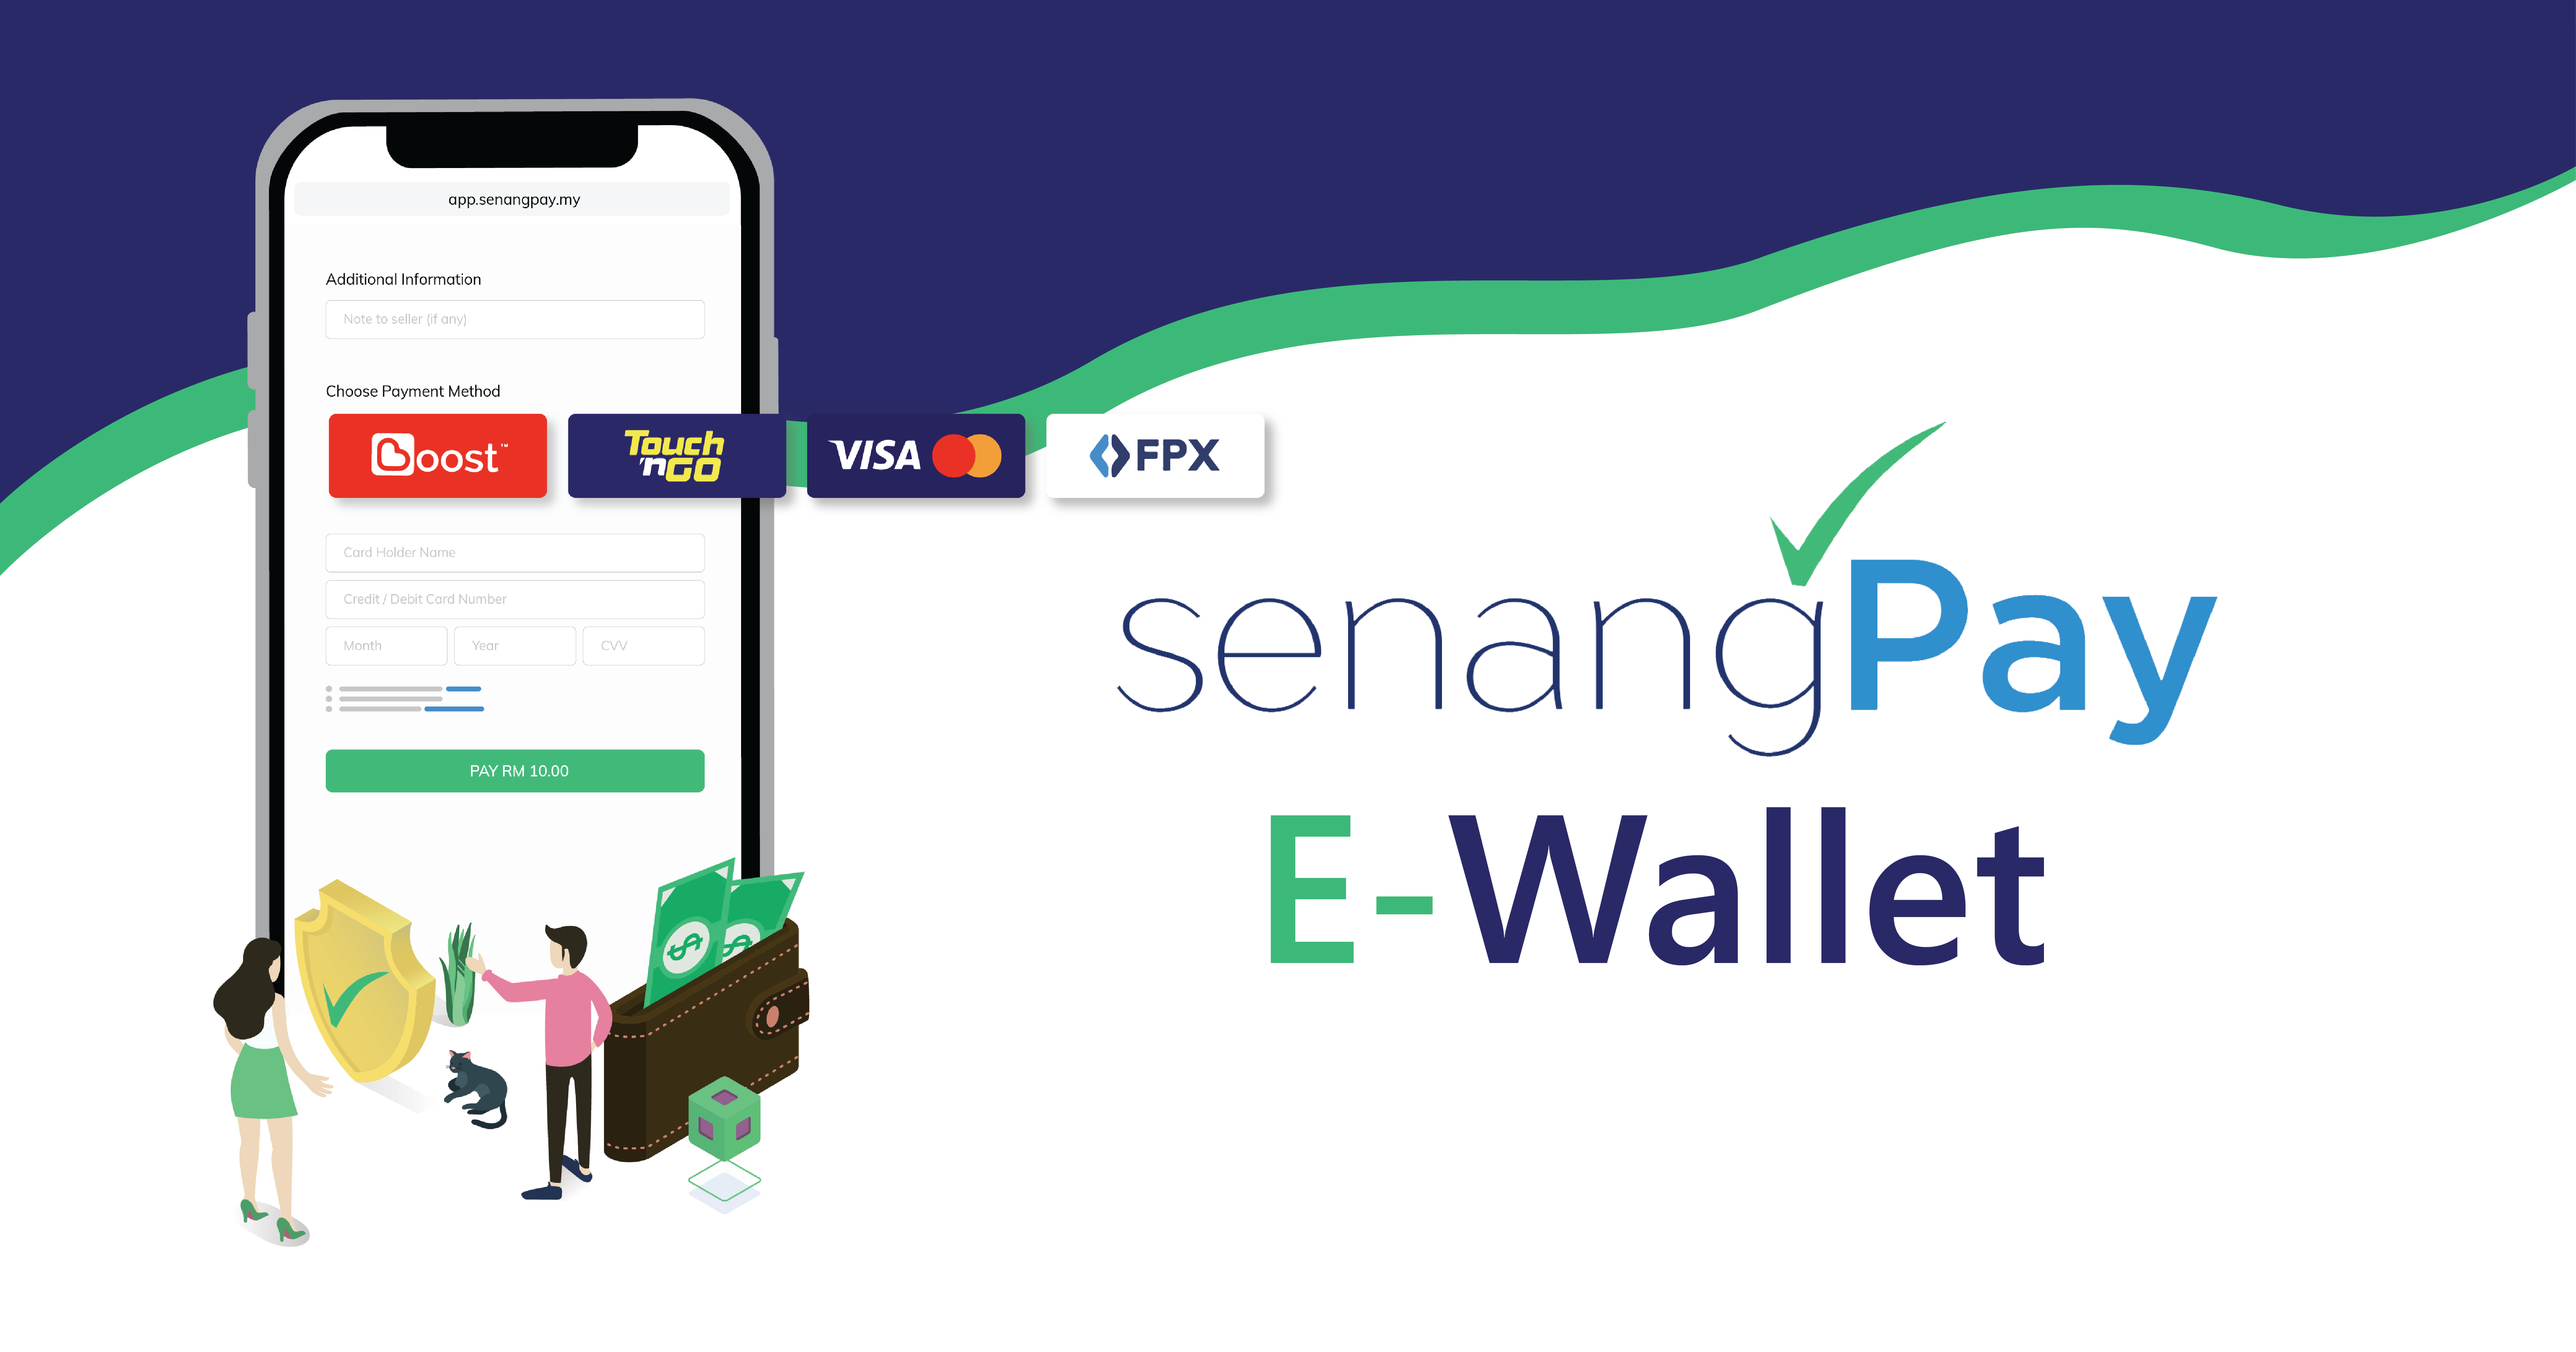 E-Wallet Payment: SenangPay New Feature!